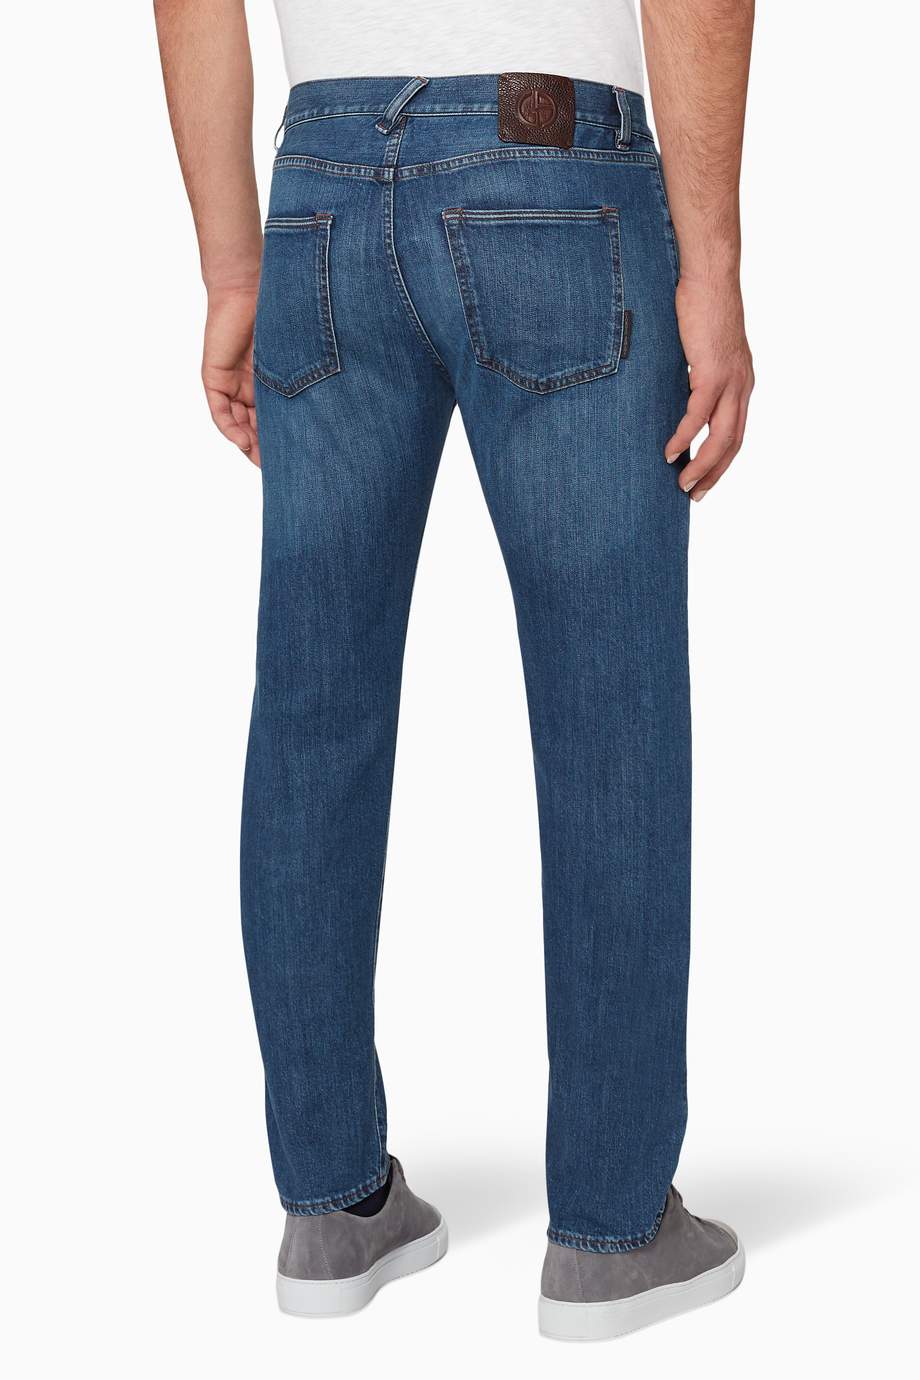 Shop Giorgio Armani Blue Slim-Fit Light Wash Denim Jeans for Men ...